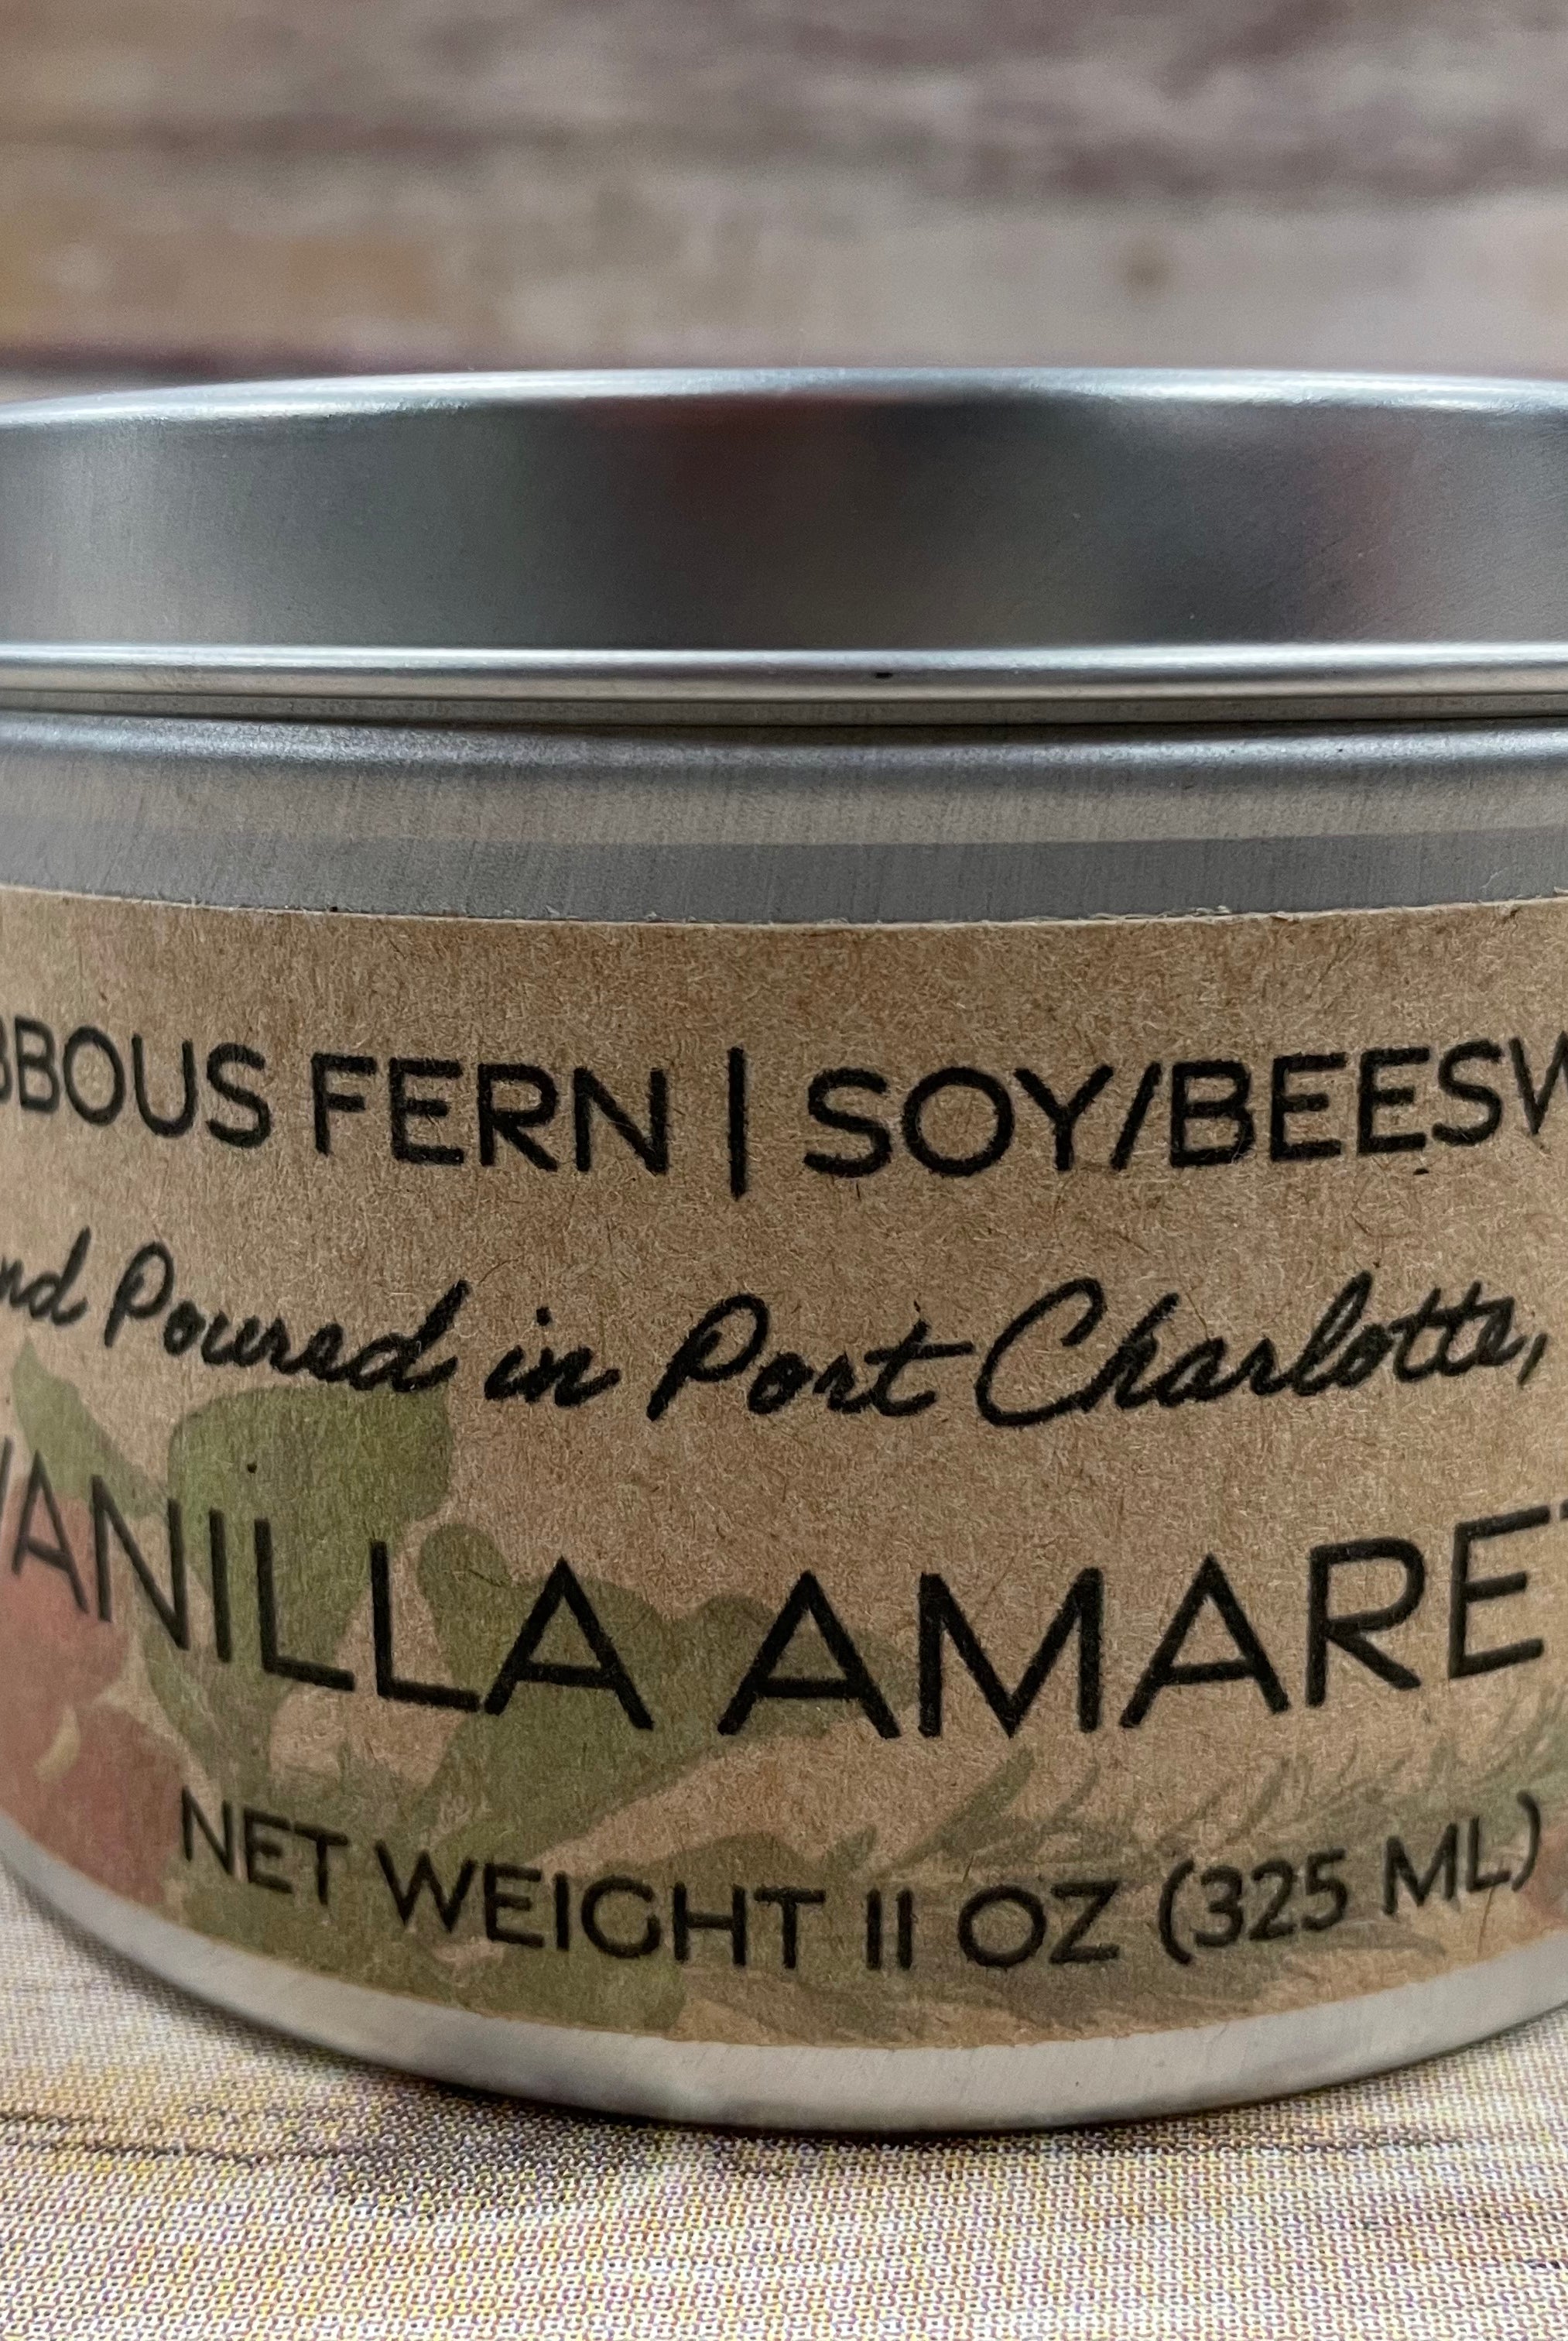 Vanilla Amaretto Candle (11 ounces)-Candles-UrbanCulture-Boutique, A North Port, Florida Women's Fashion Boutique